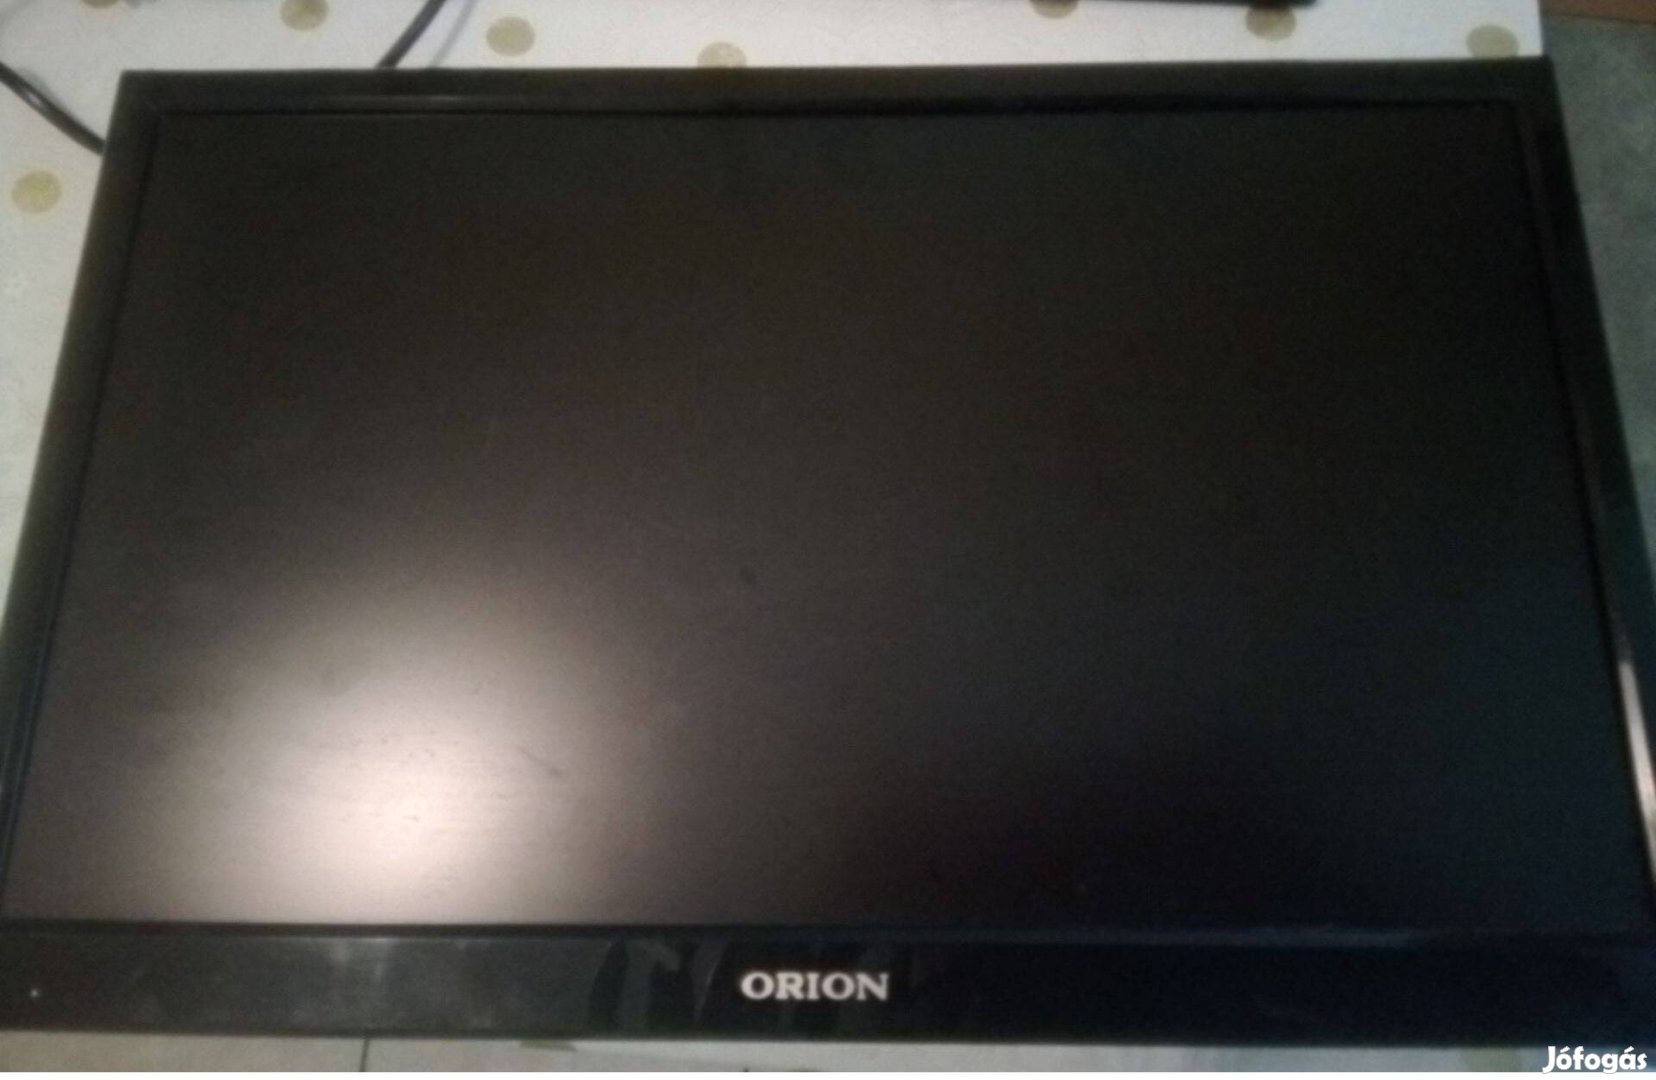 Orion tv T 19 Dled kis hanghibaval